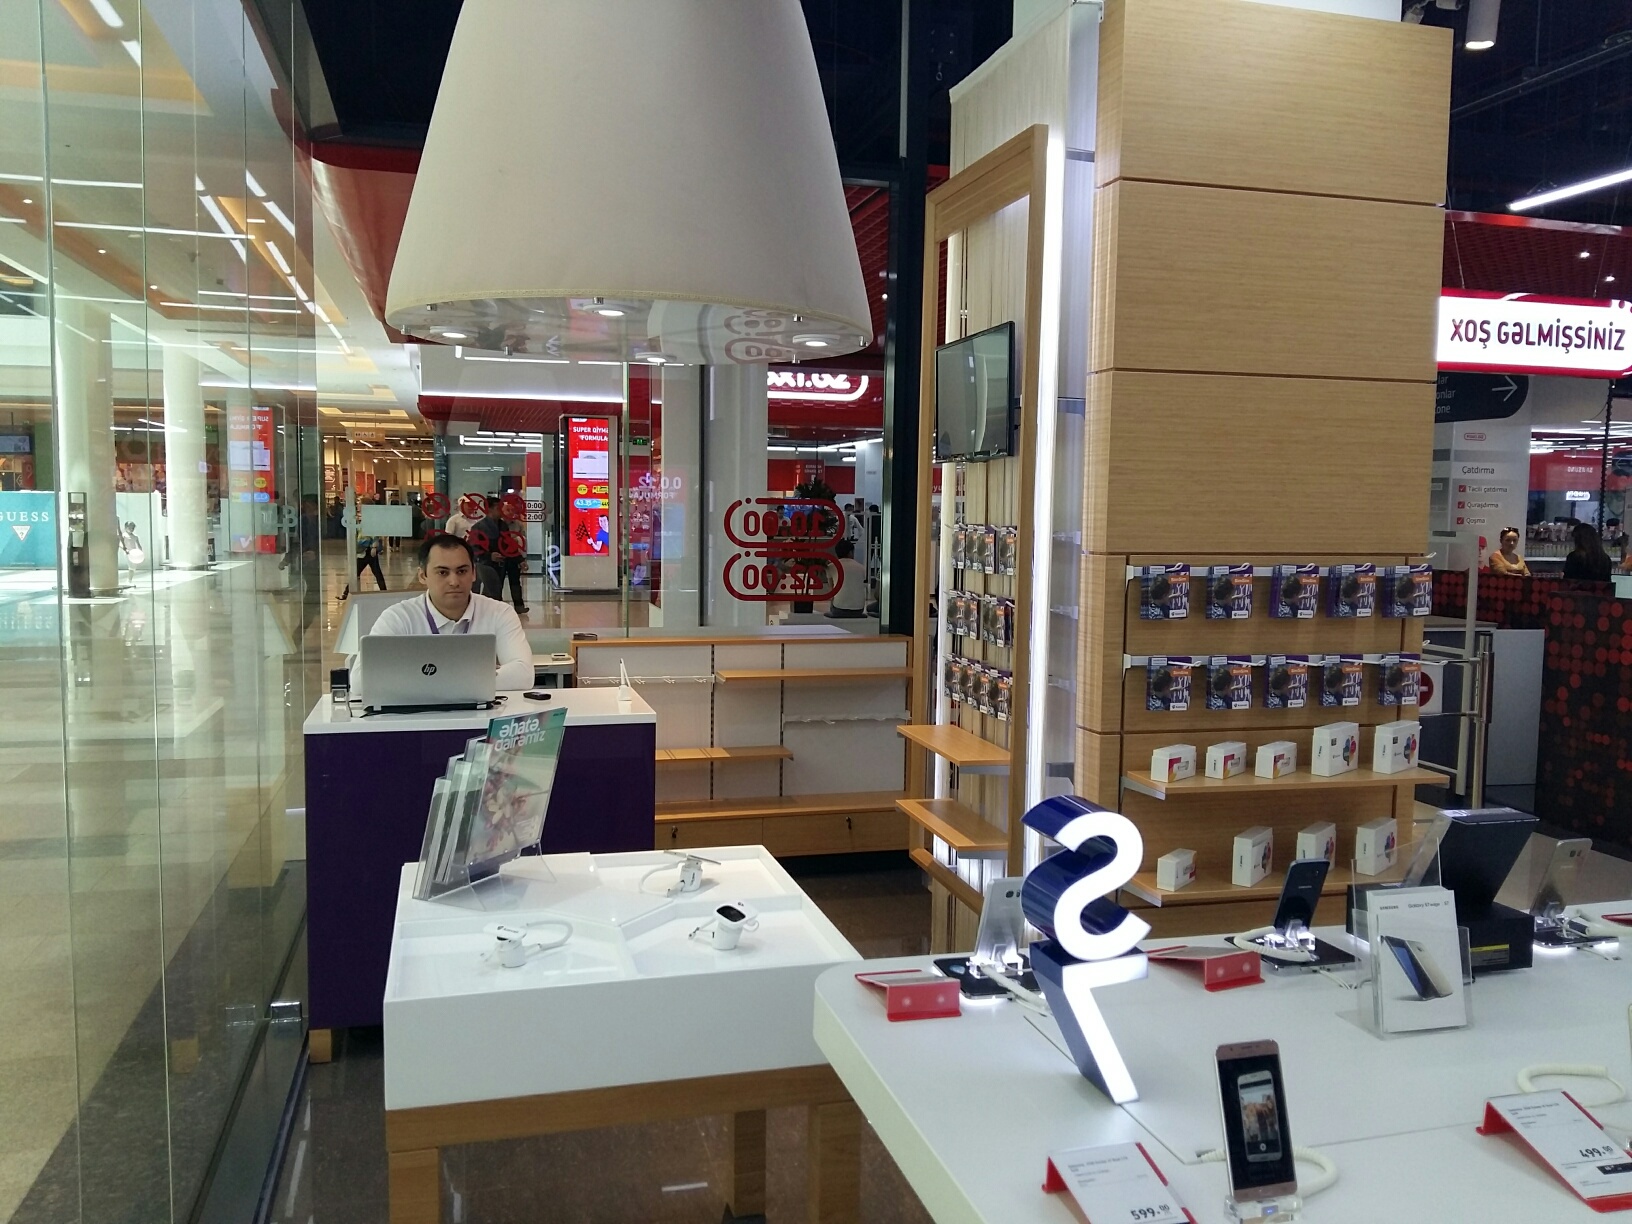 Azercell Customer Service now in Ganjlik Mall